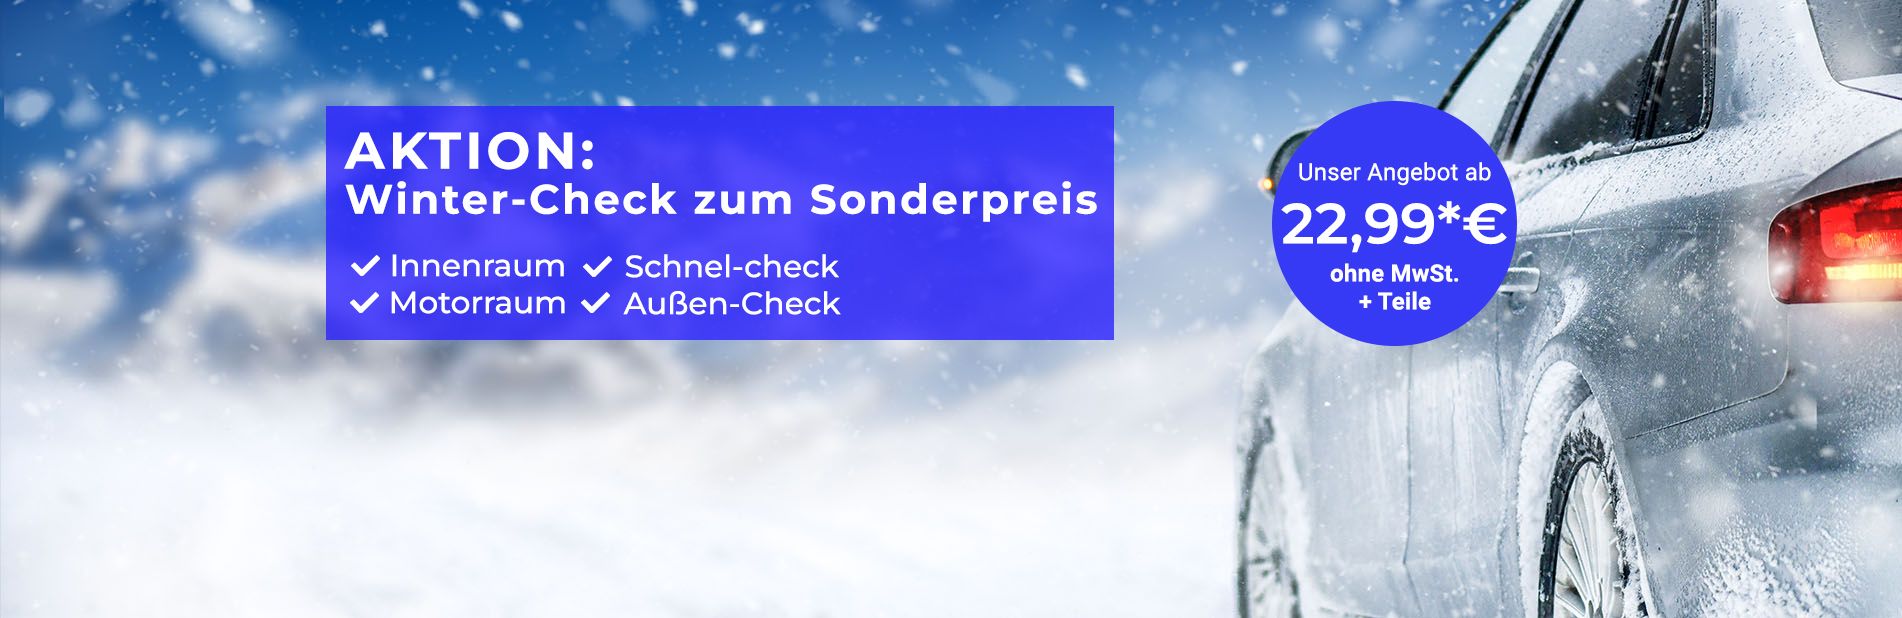 AKTION: Winter-Check zum Sonderpreis